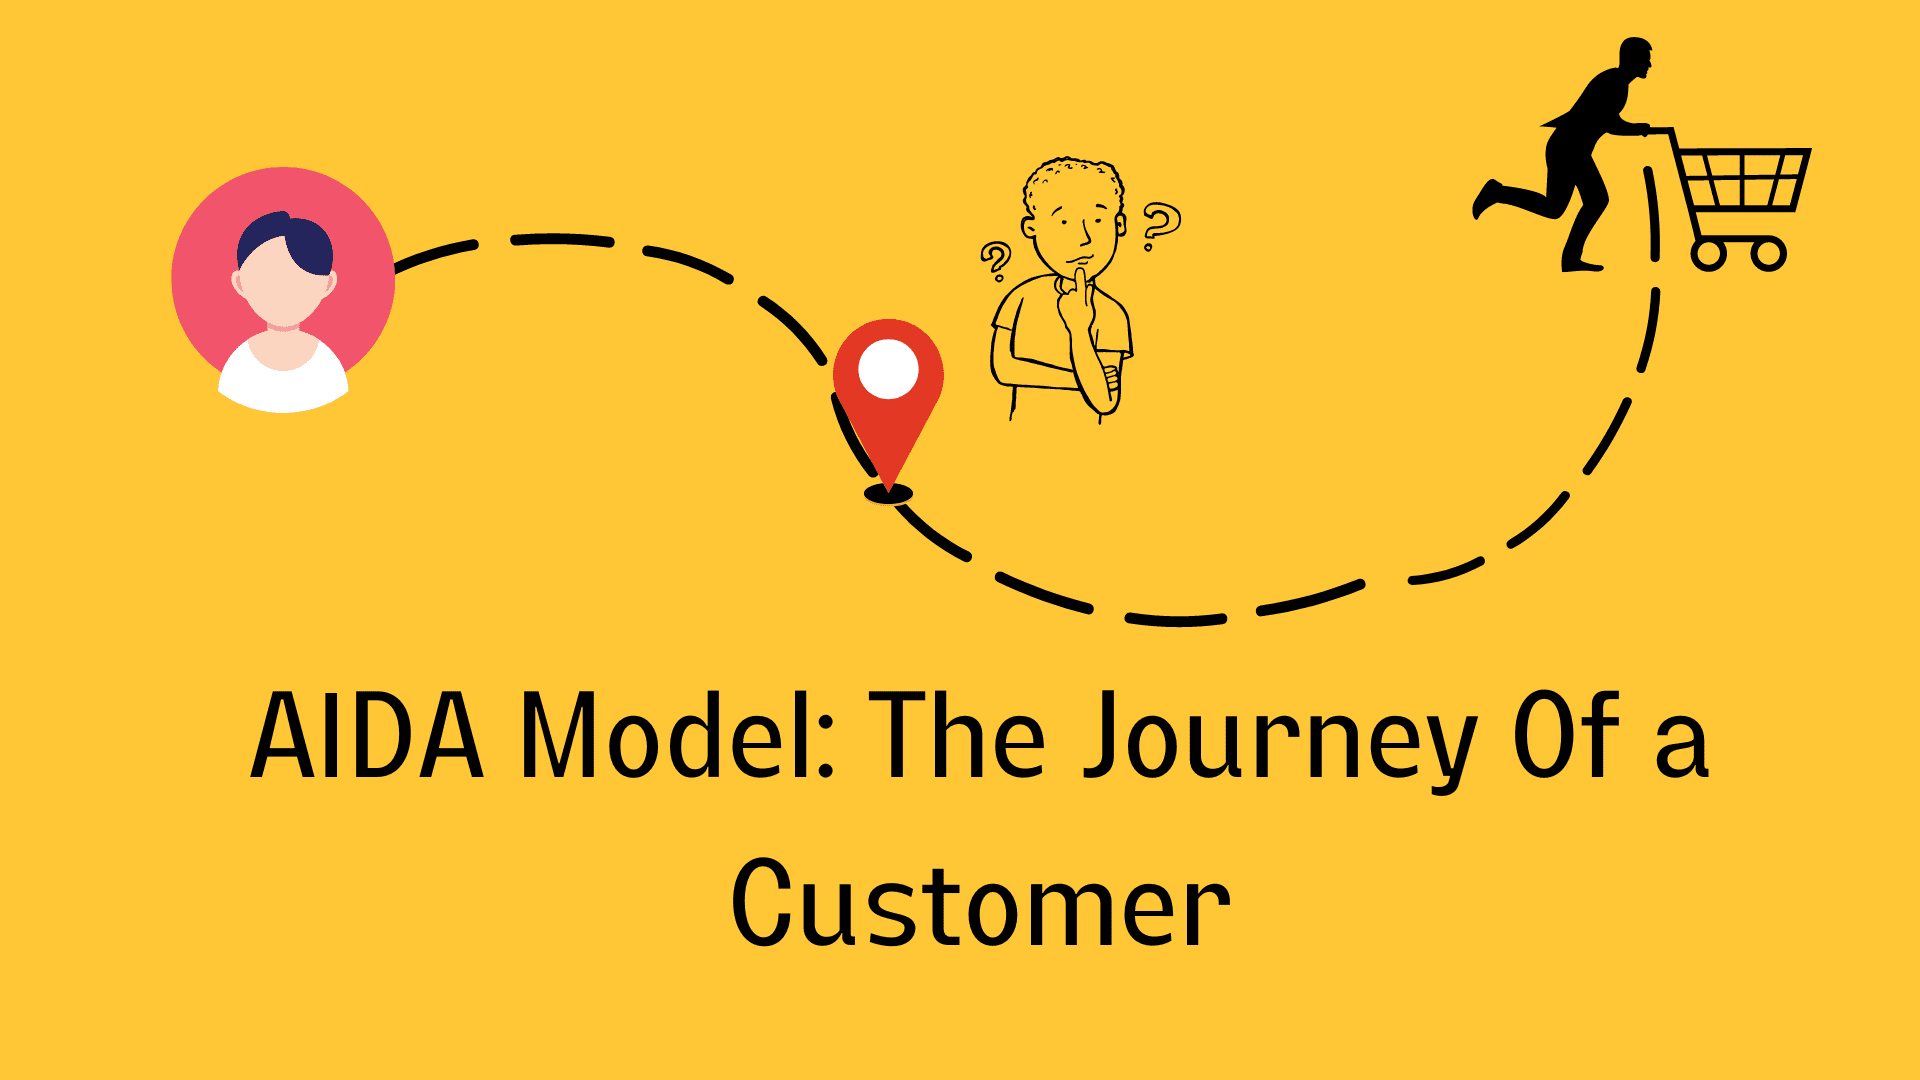 AIDA Model: The Journey of a Customer